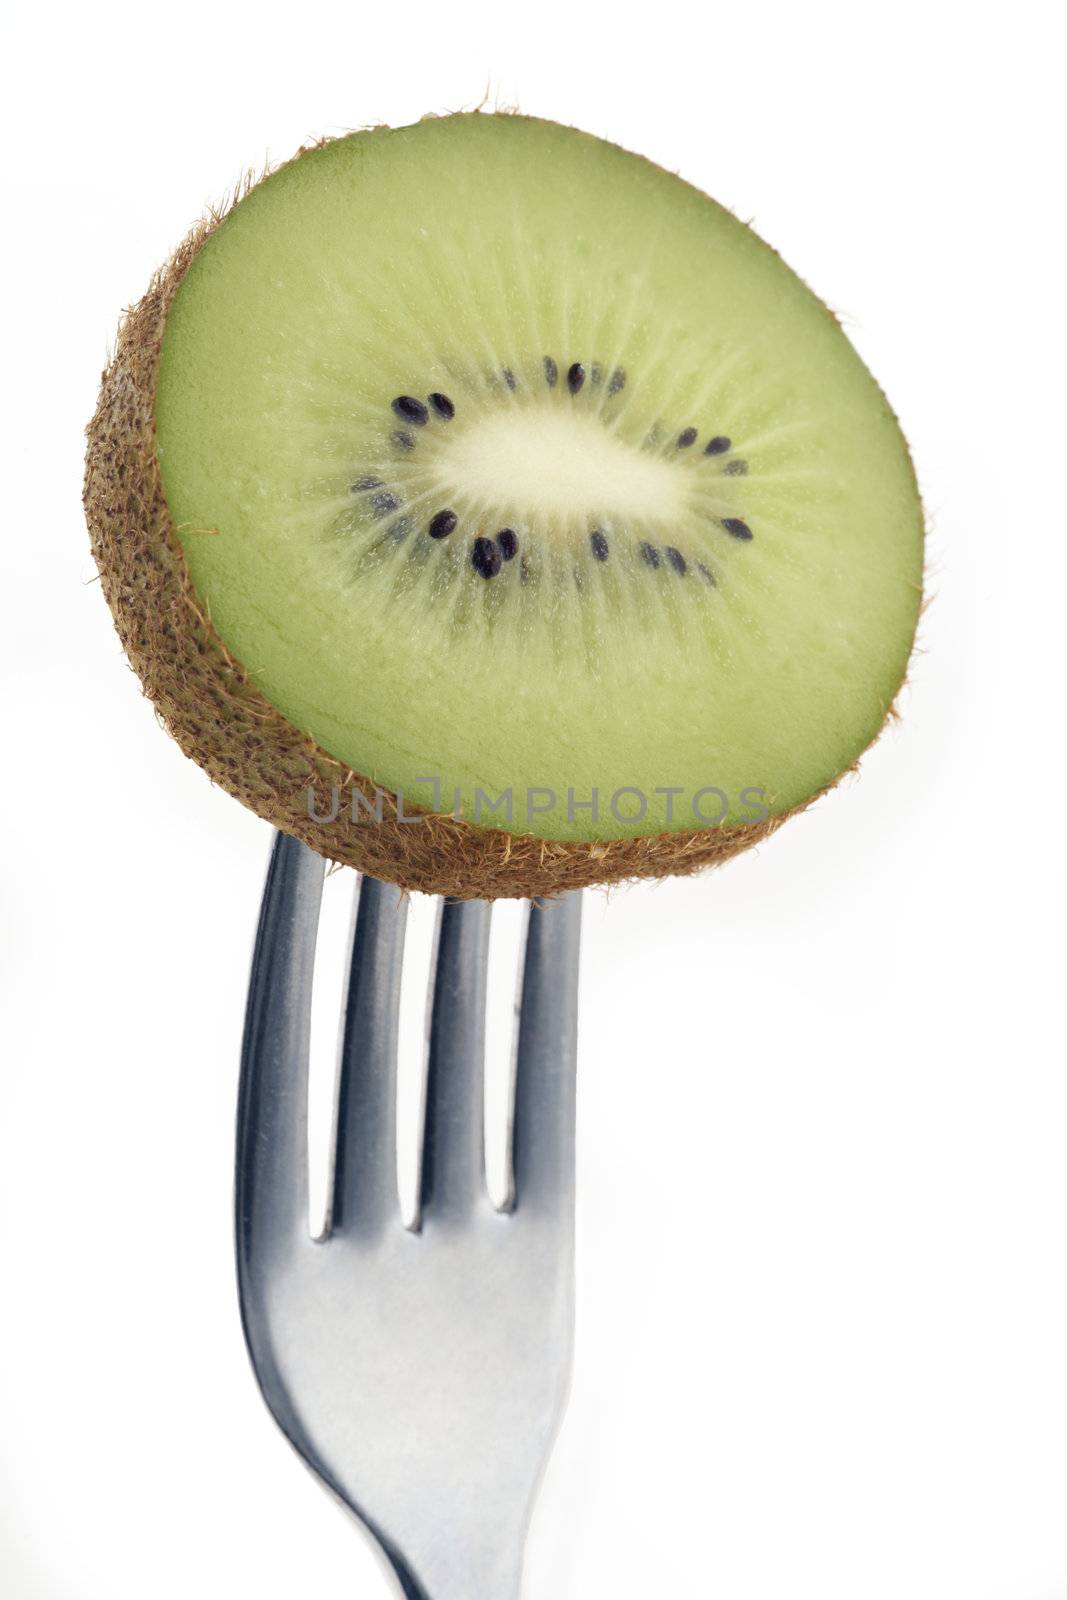 slice of kiwi pierced on a fork against plain background